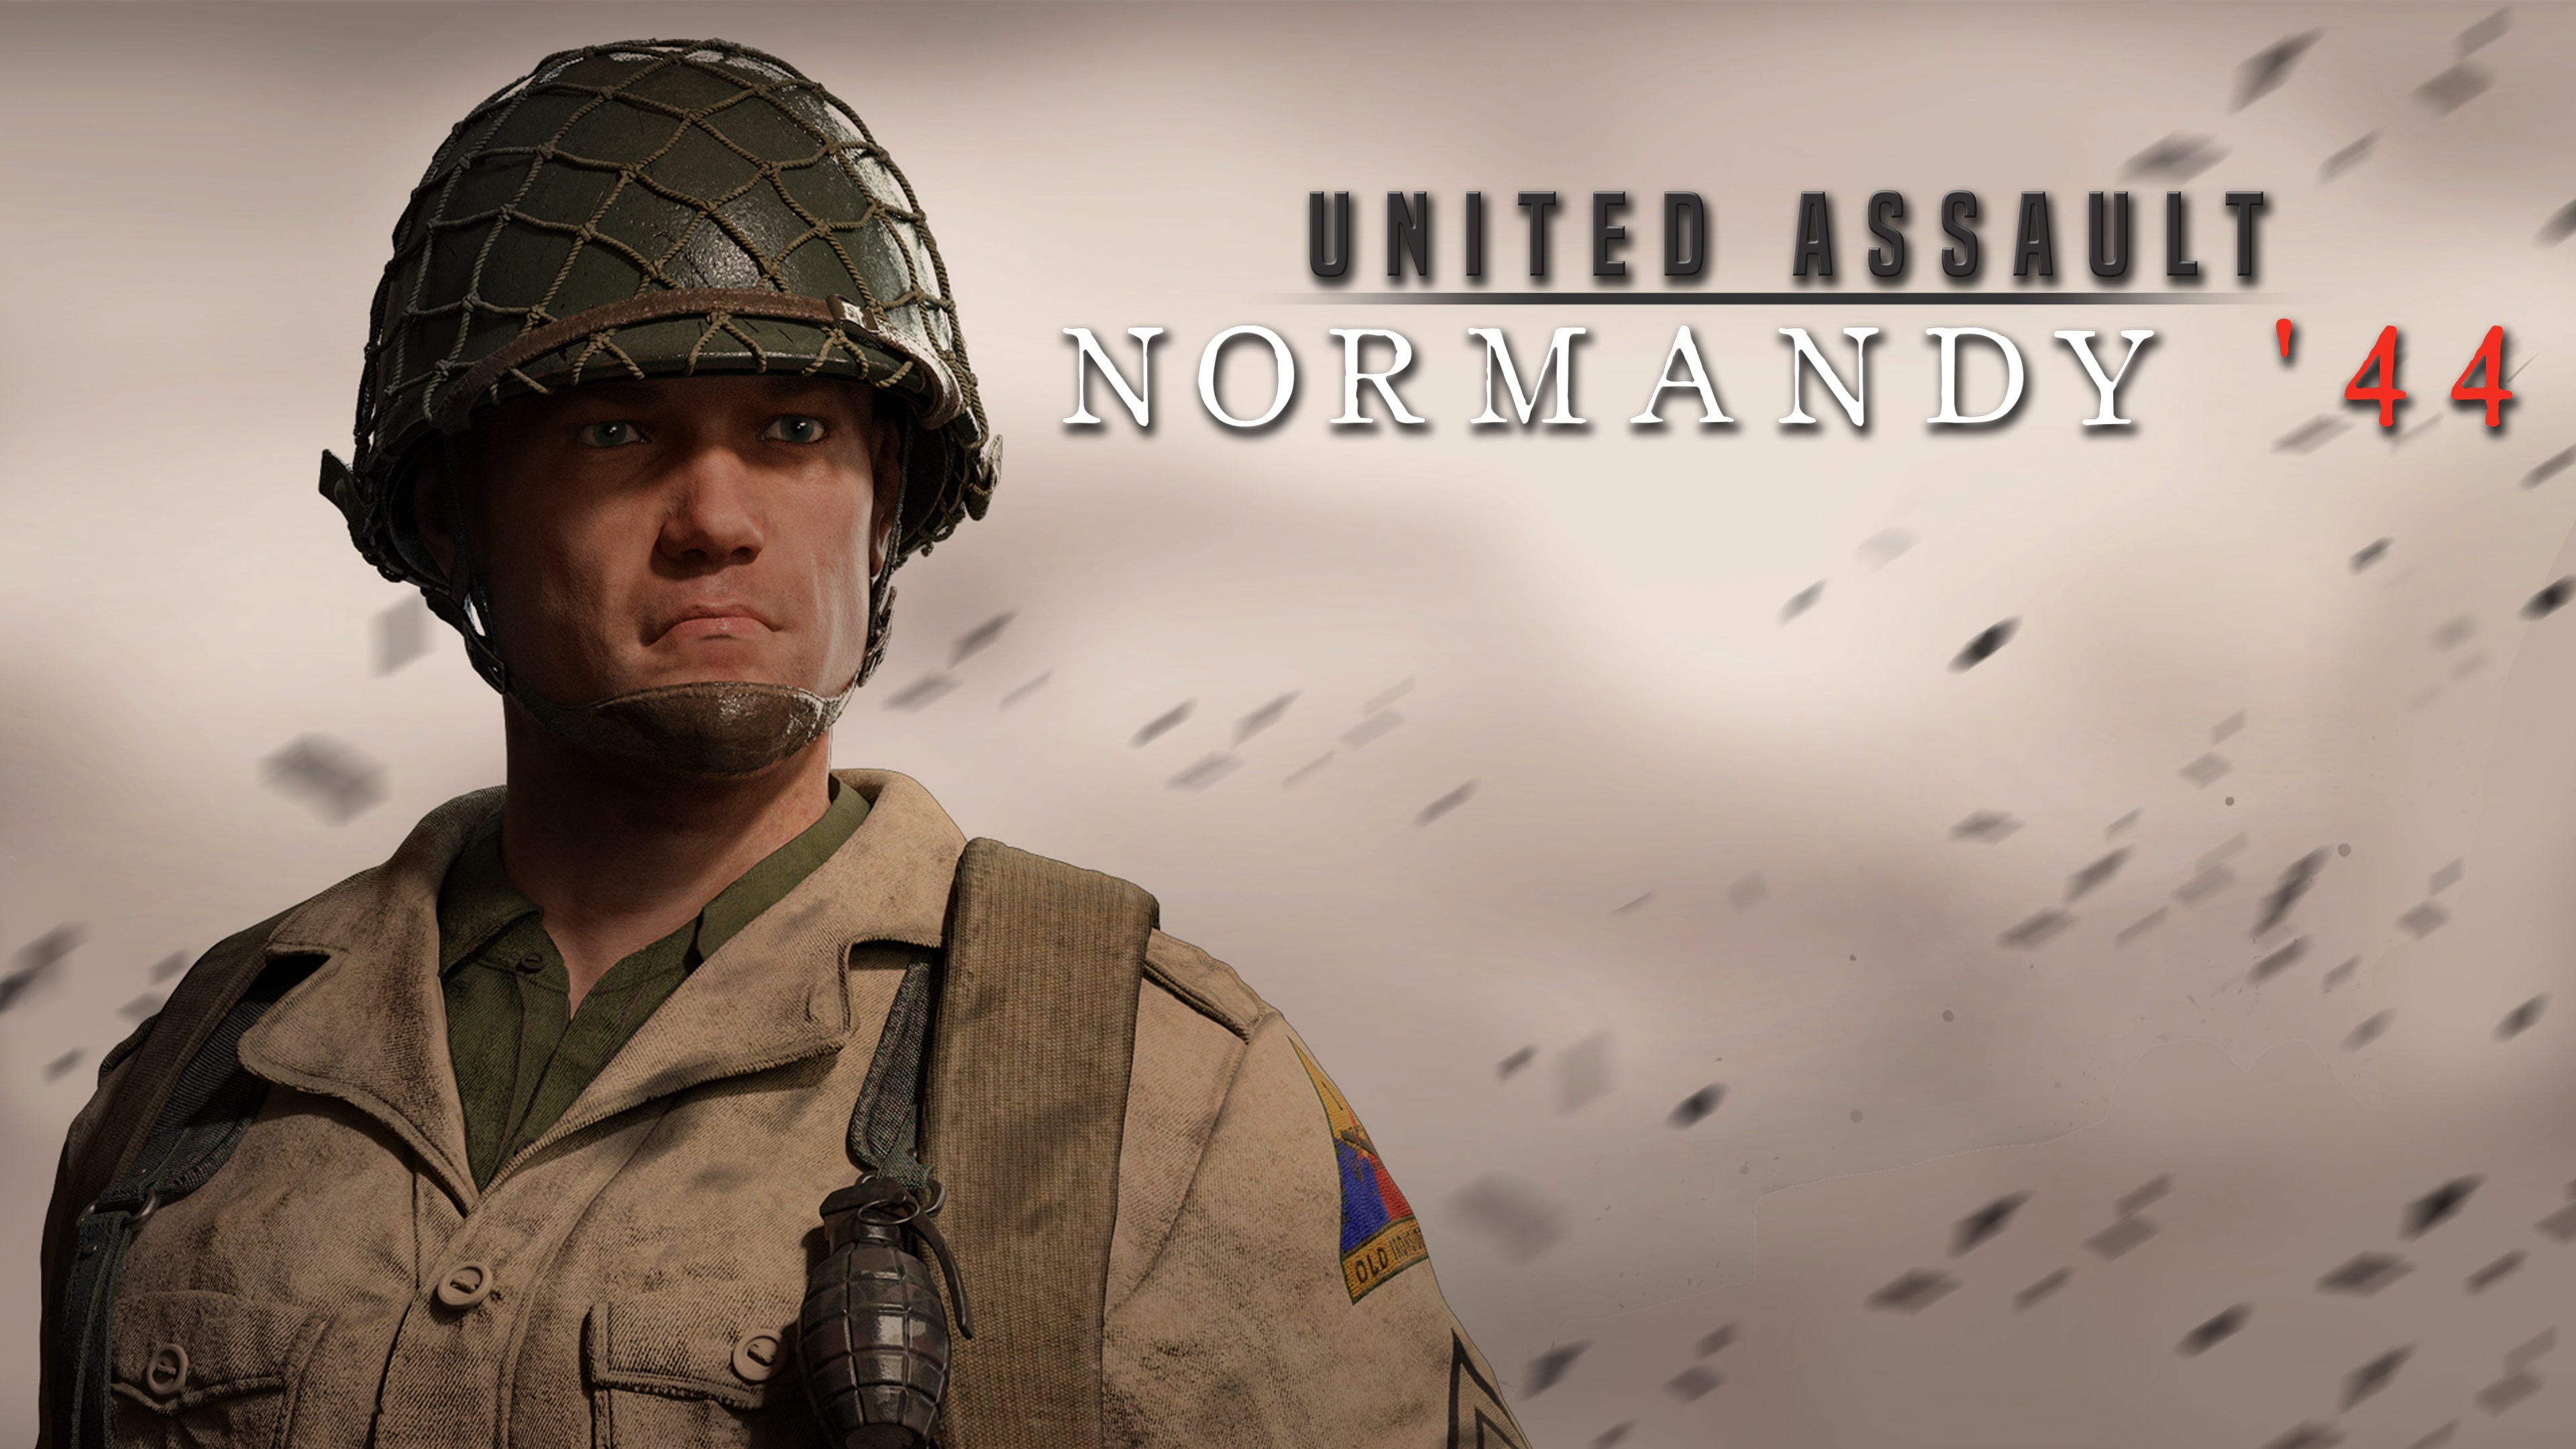 United Assault - Normandy '44